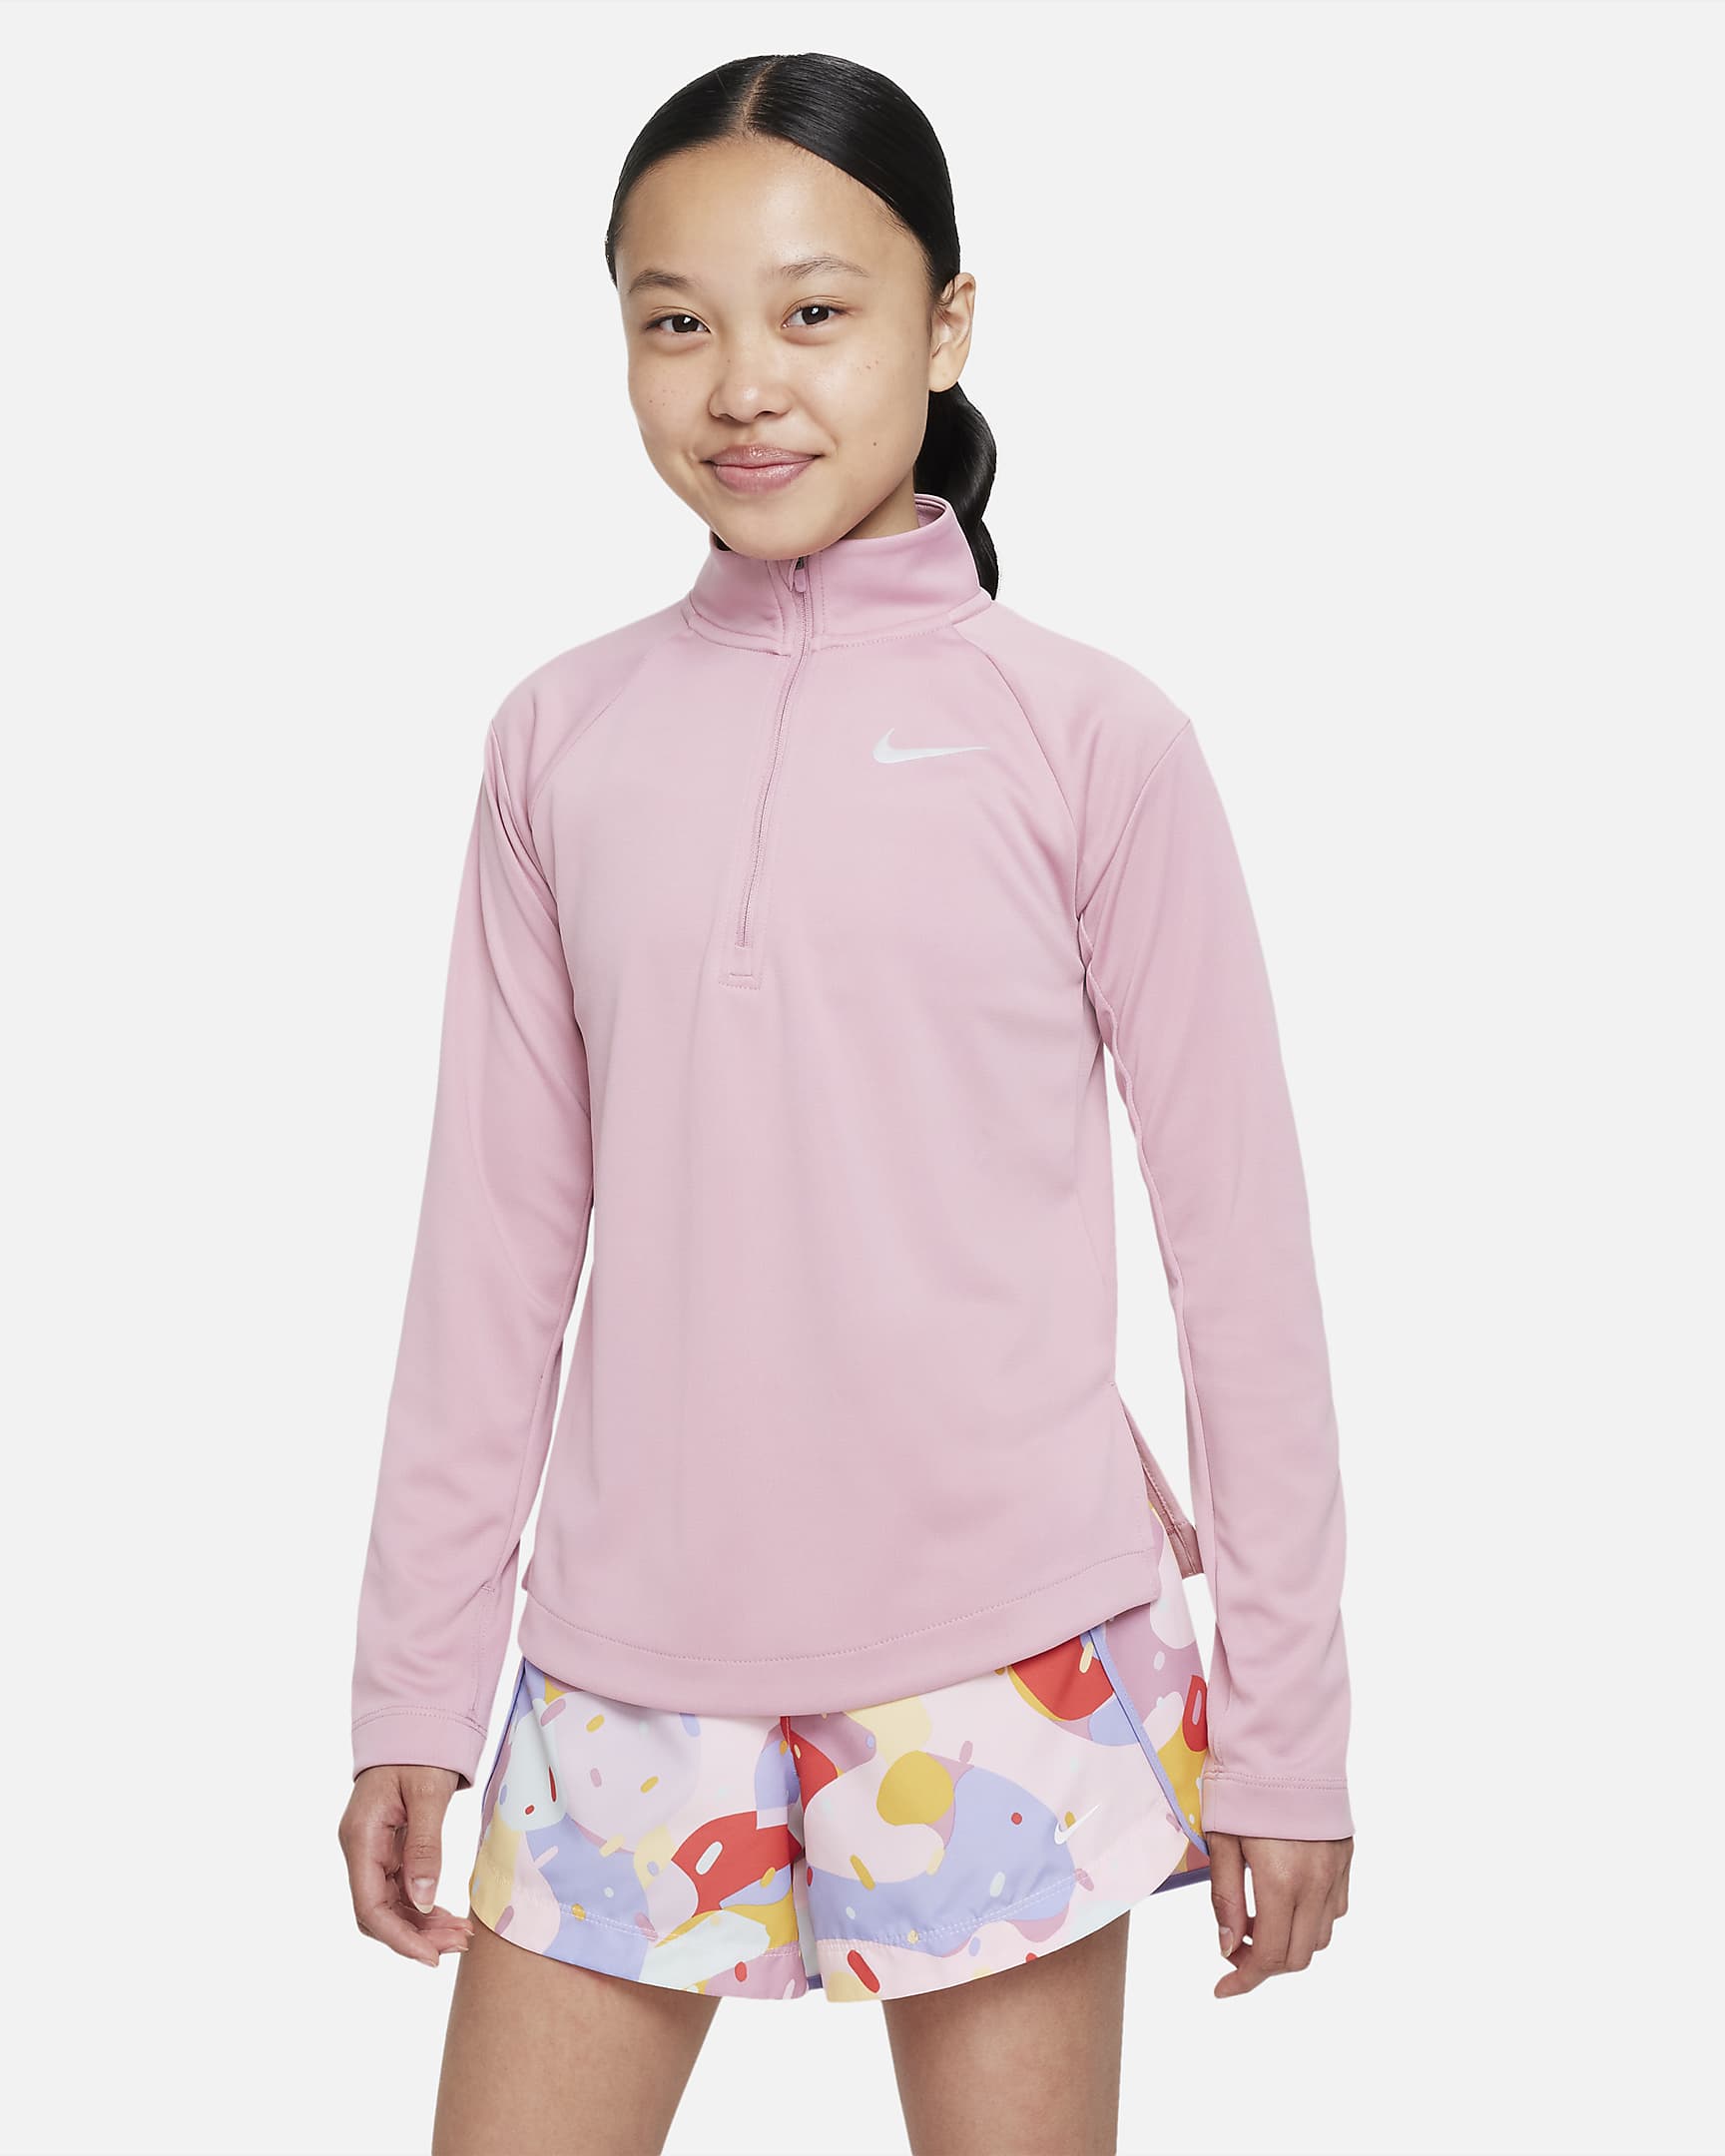 Nike Dri-FIT Big Kids' (Girls') Long-Sleeve Running Top. Nike.com